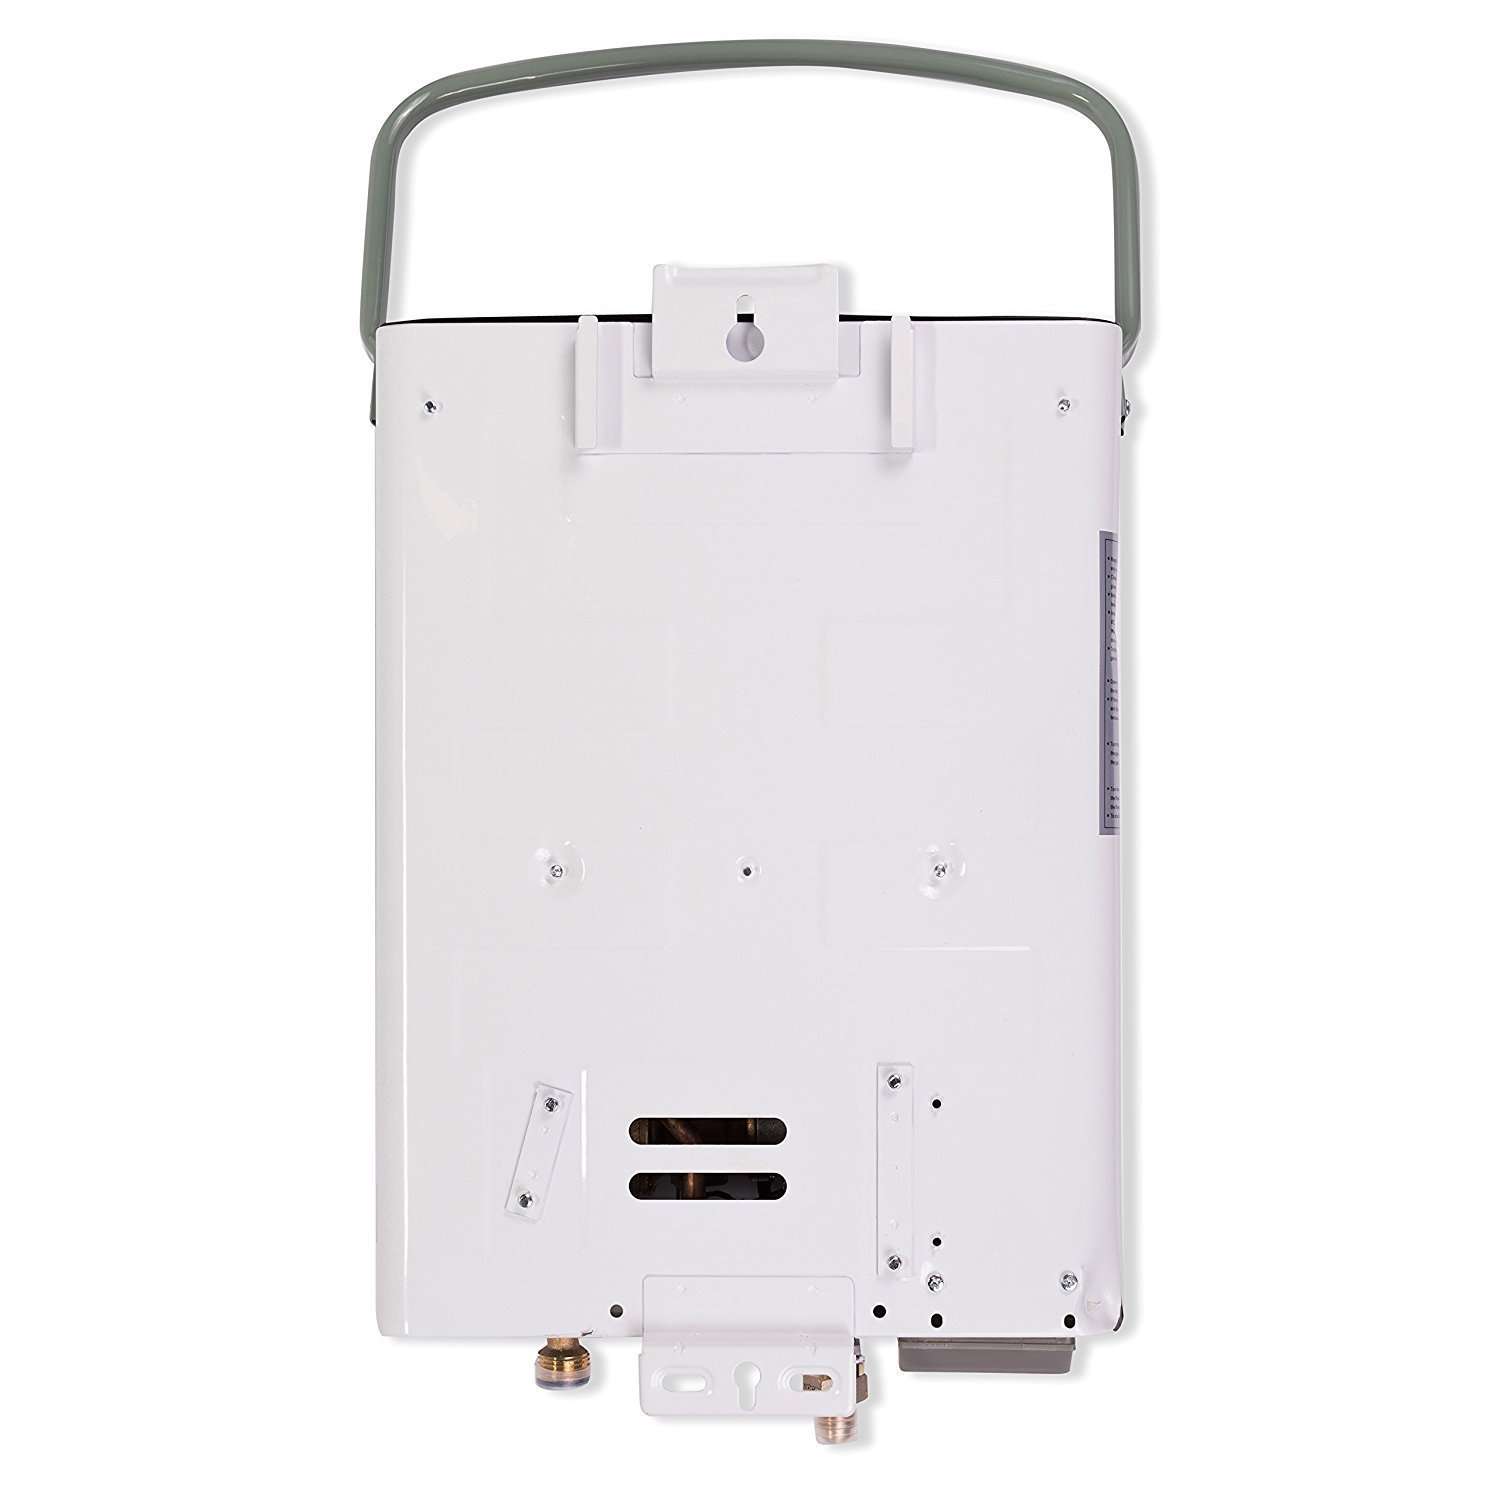 Eccotemp, Eccotemp L5 1.5 GPM Propane Tankless Water Heater w/ Flojet Pump & Strainer Manufacturer RFB